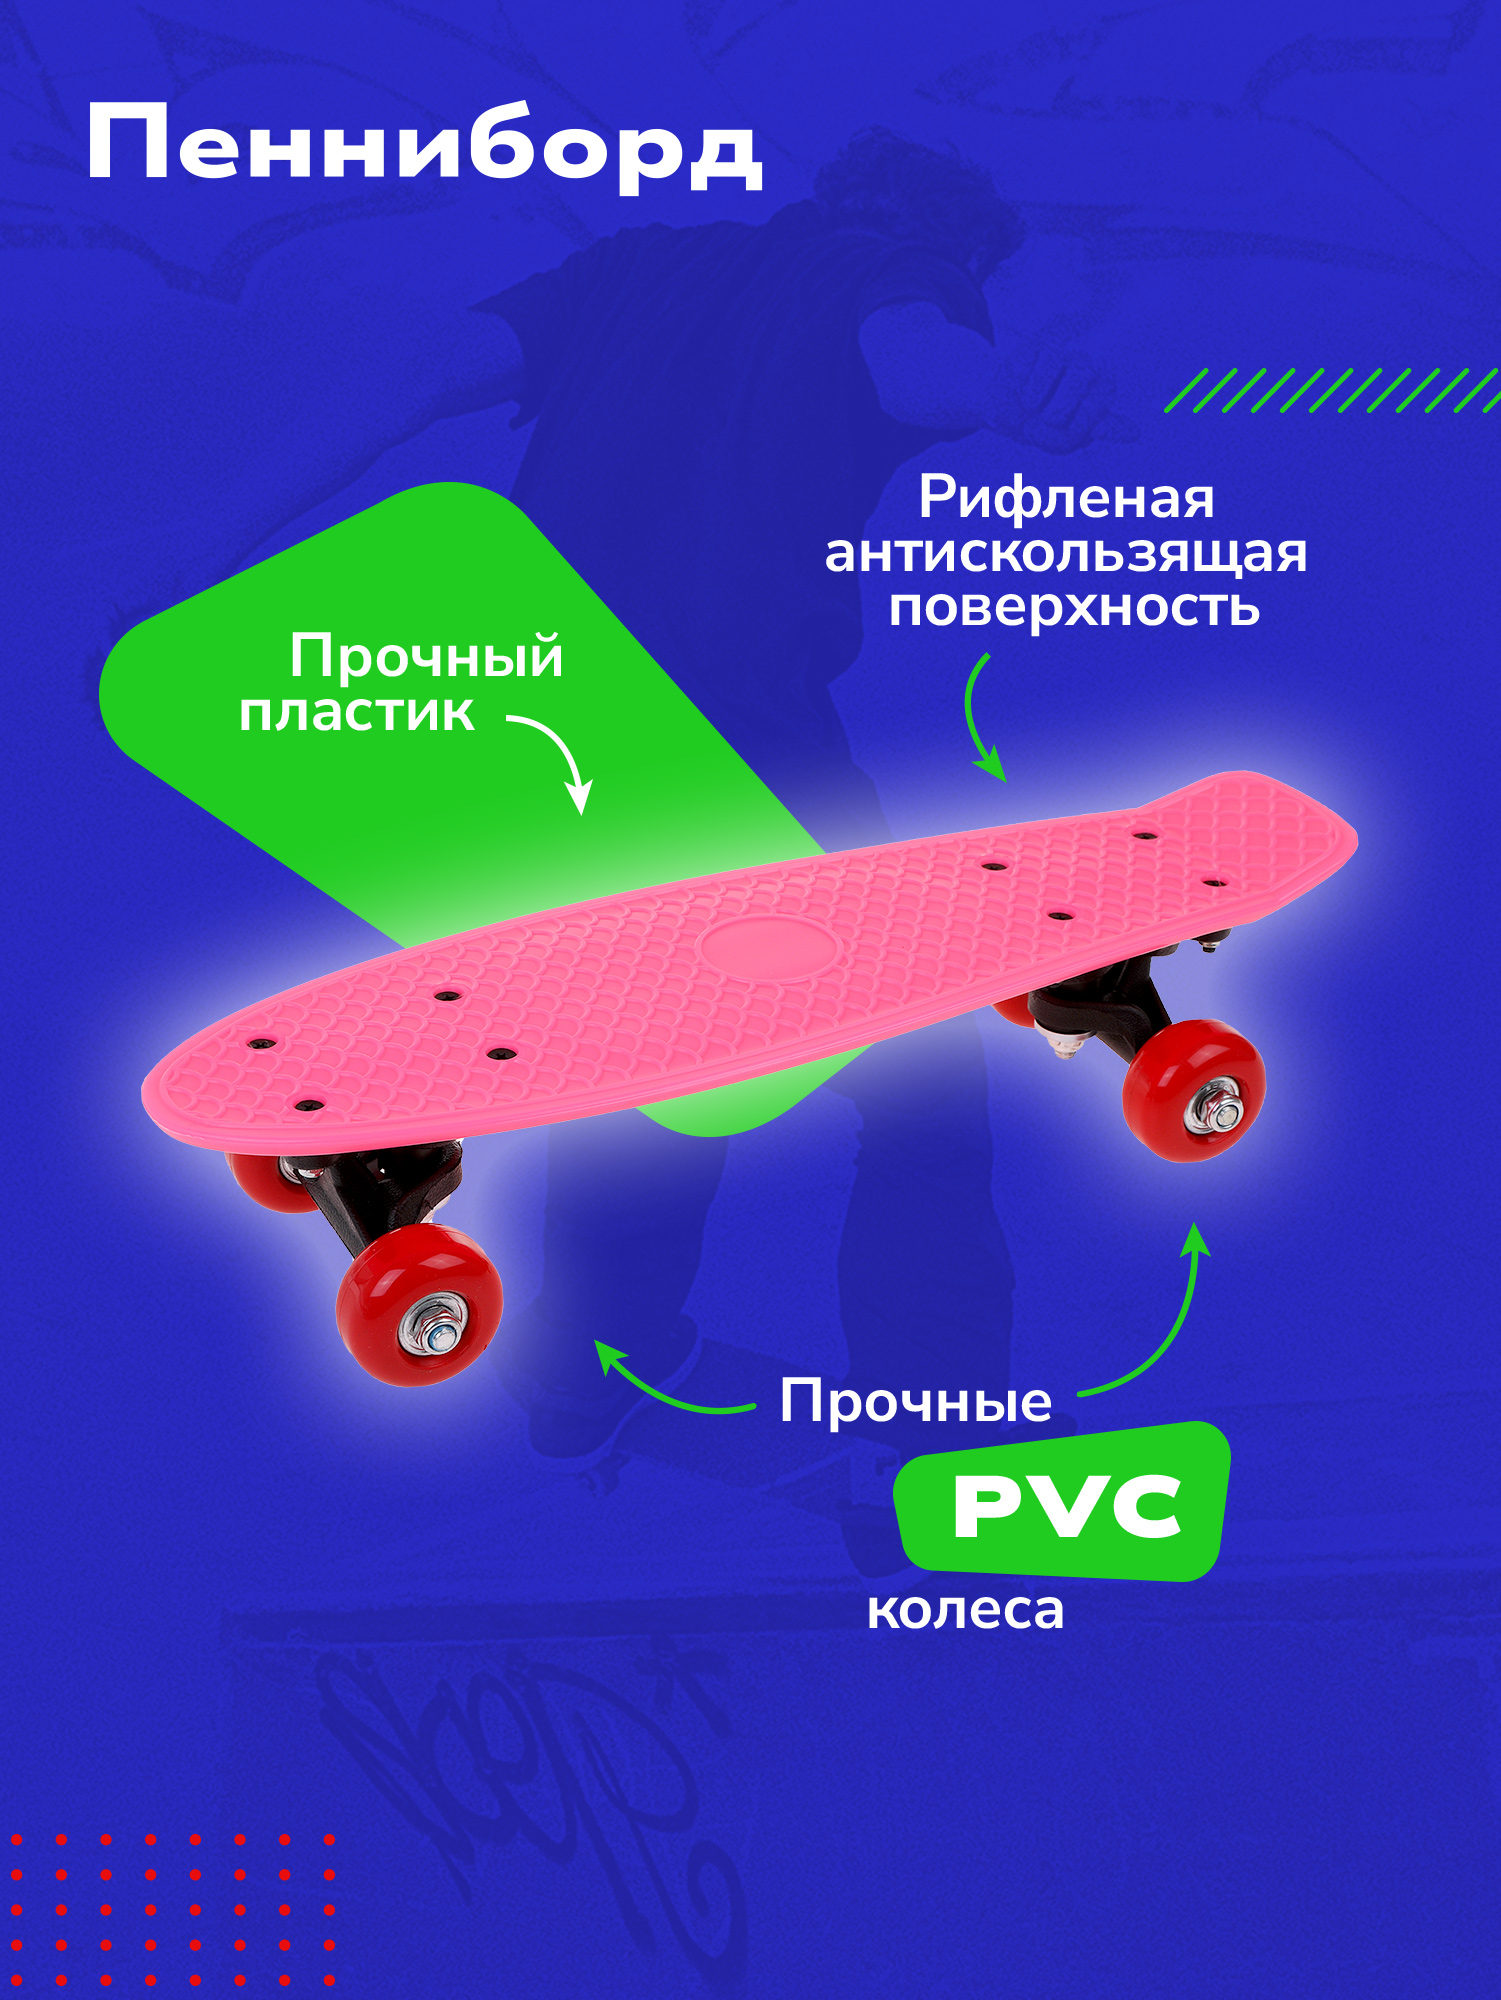 Скейтборд Наша Игрушка пенниборд пластик 41*12 см колеса PVC крепления пластик розовый - фото 1